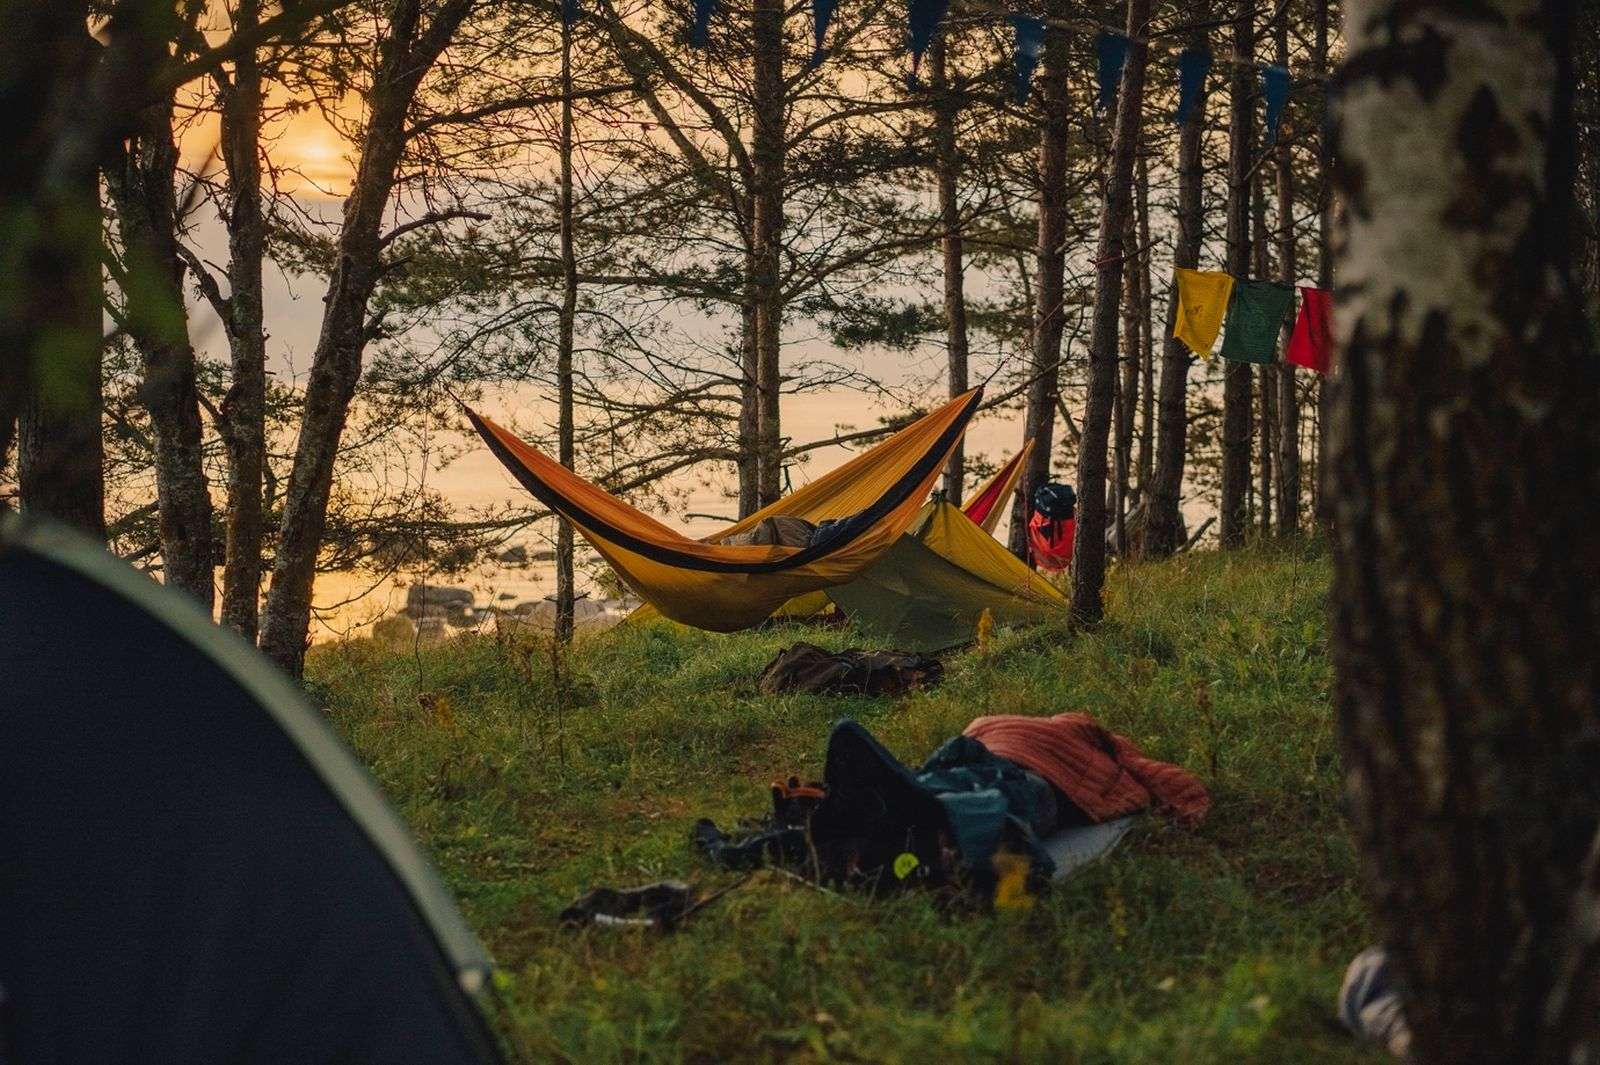 People sleeping on the ground and in hammocks near the sea